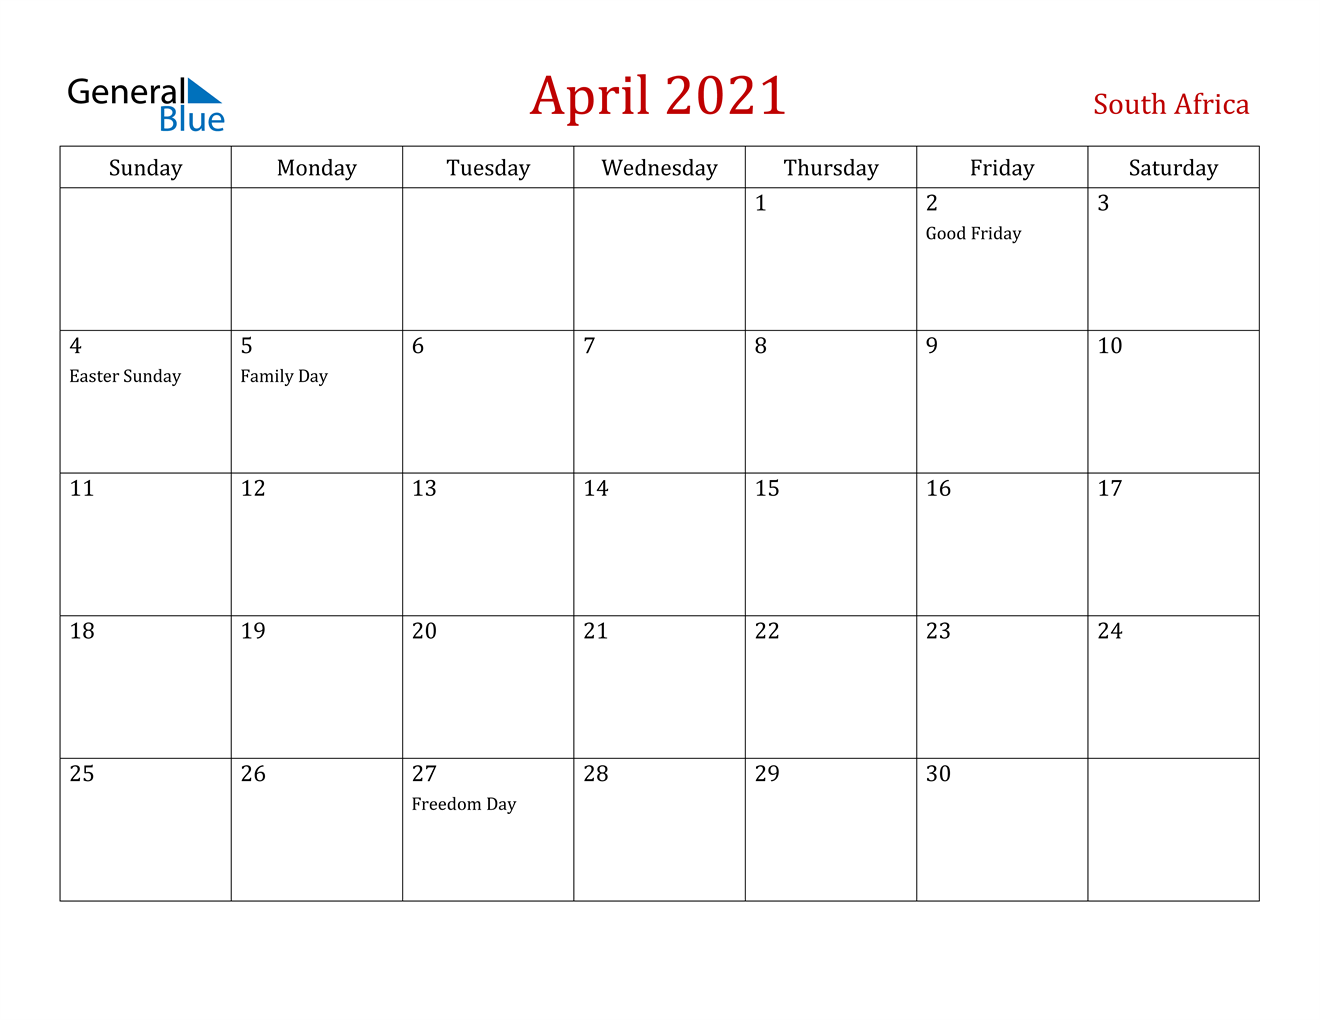 April 2021 Calendar - South Africa